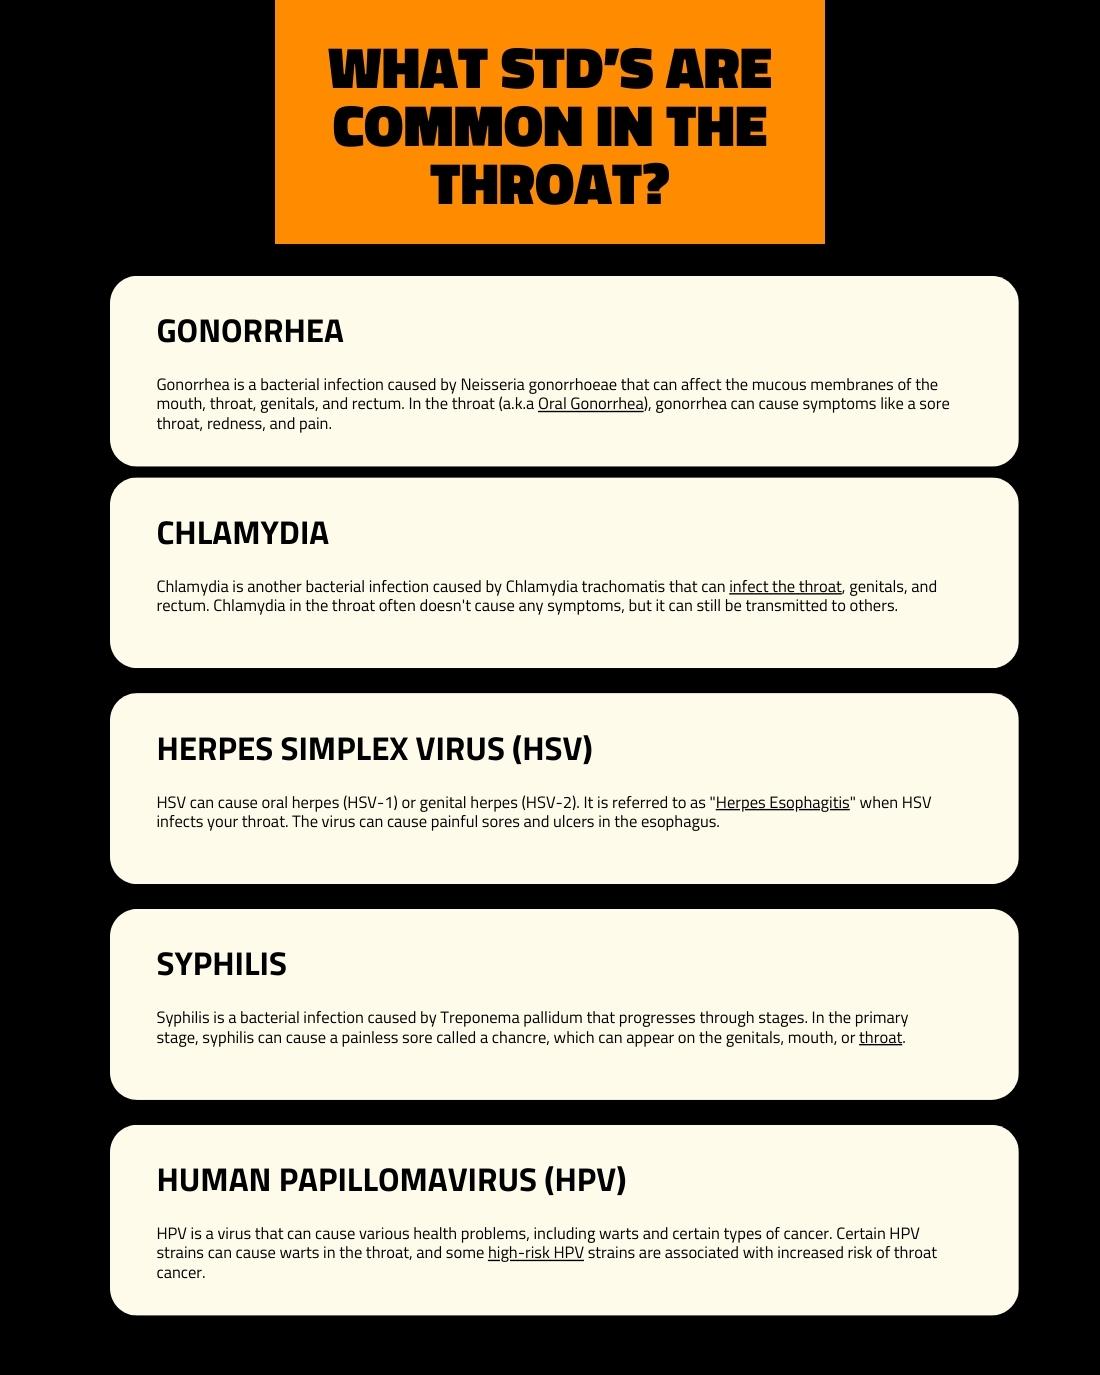 STDs in throat